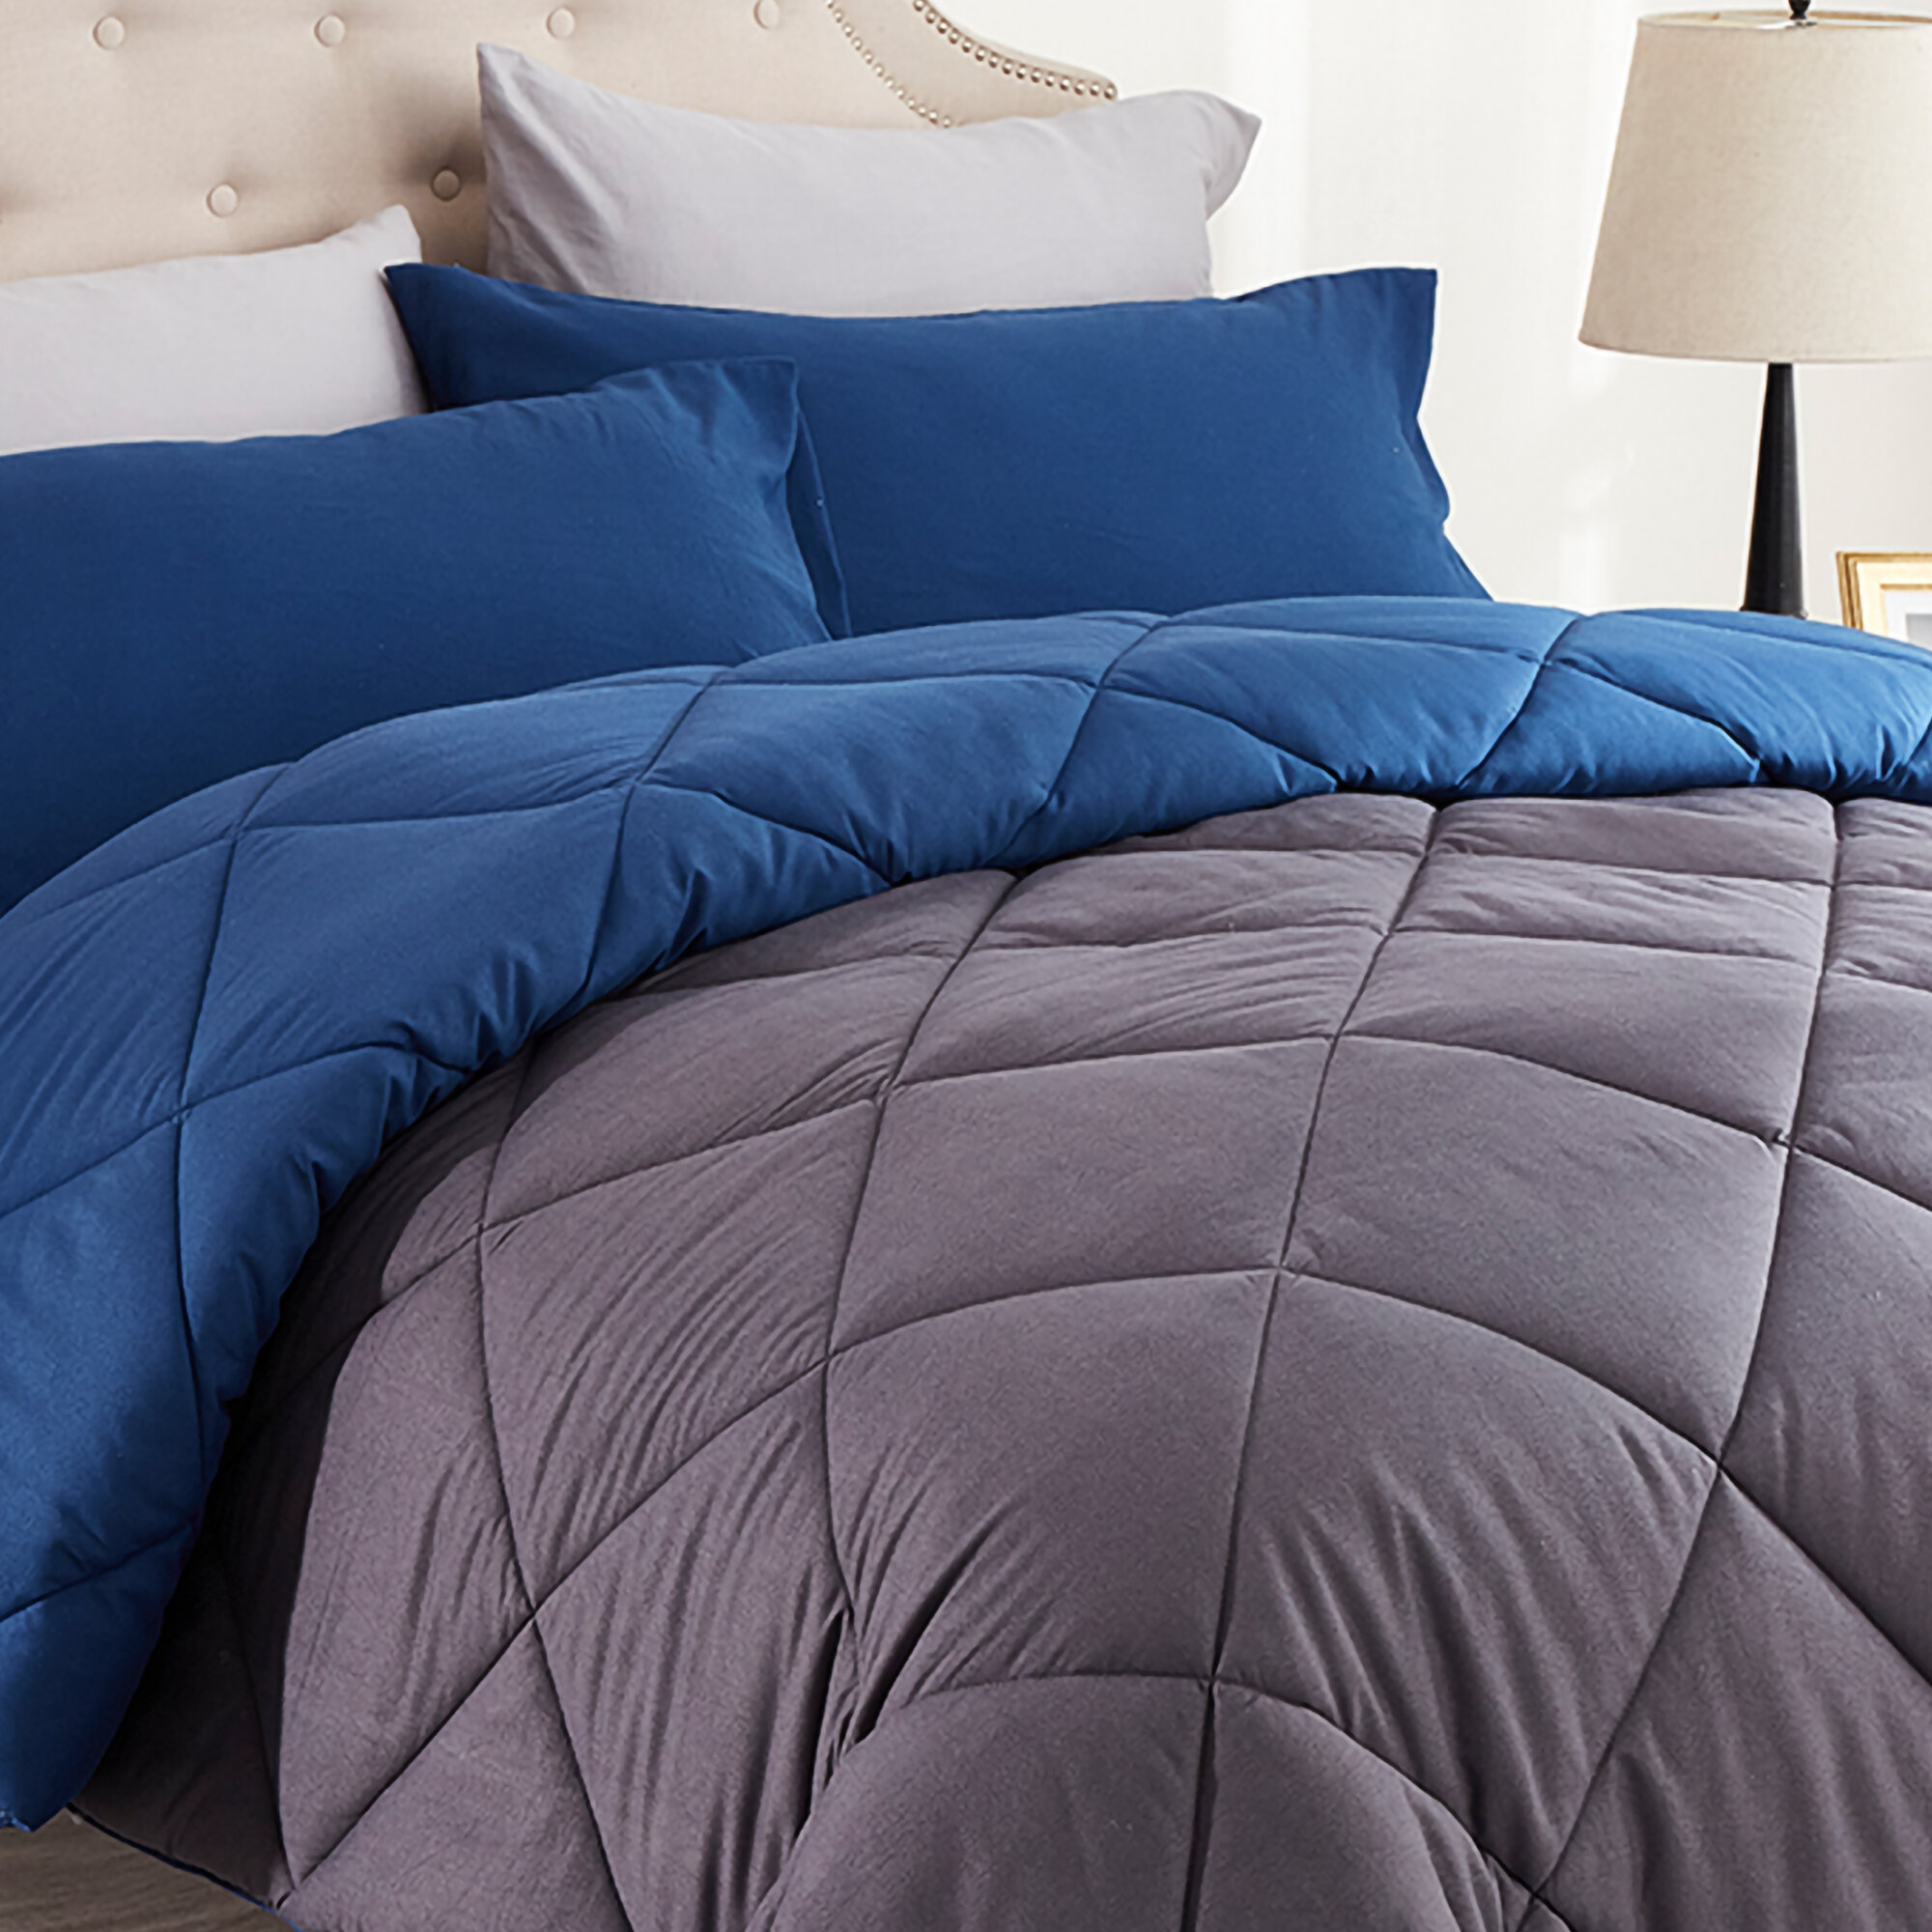 Premium Soft Brushed Down Alternative Comforter Duvet Insert Washable All Season 